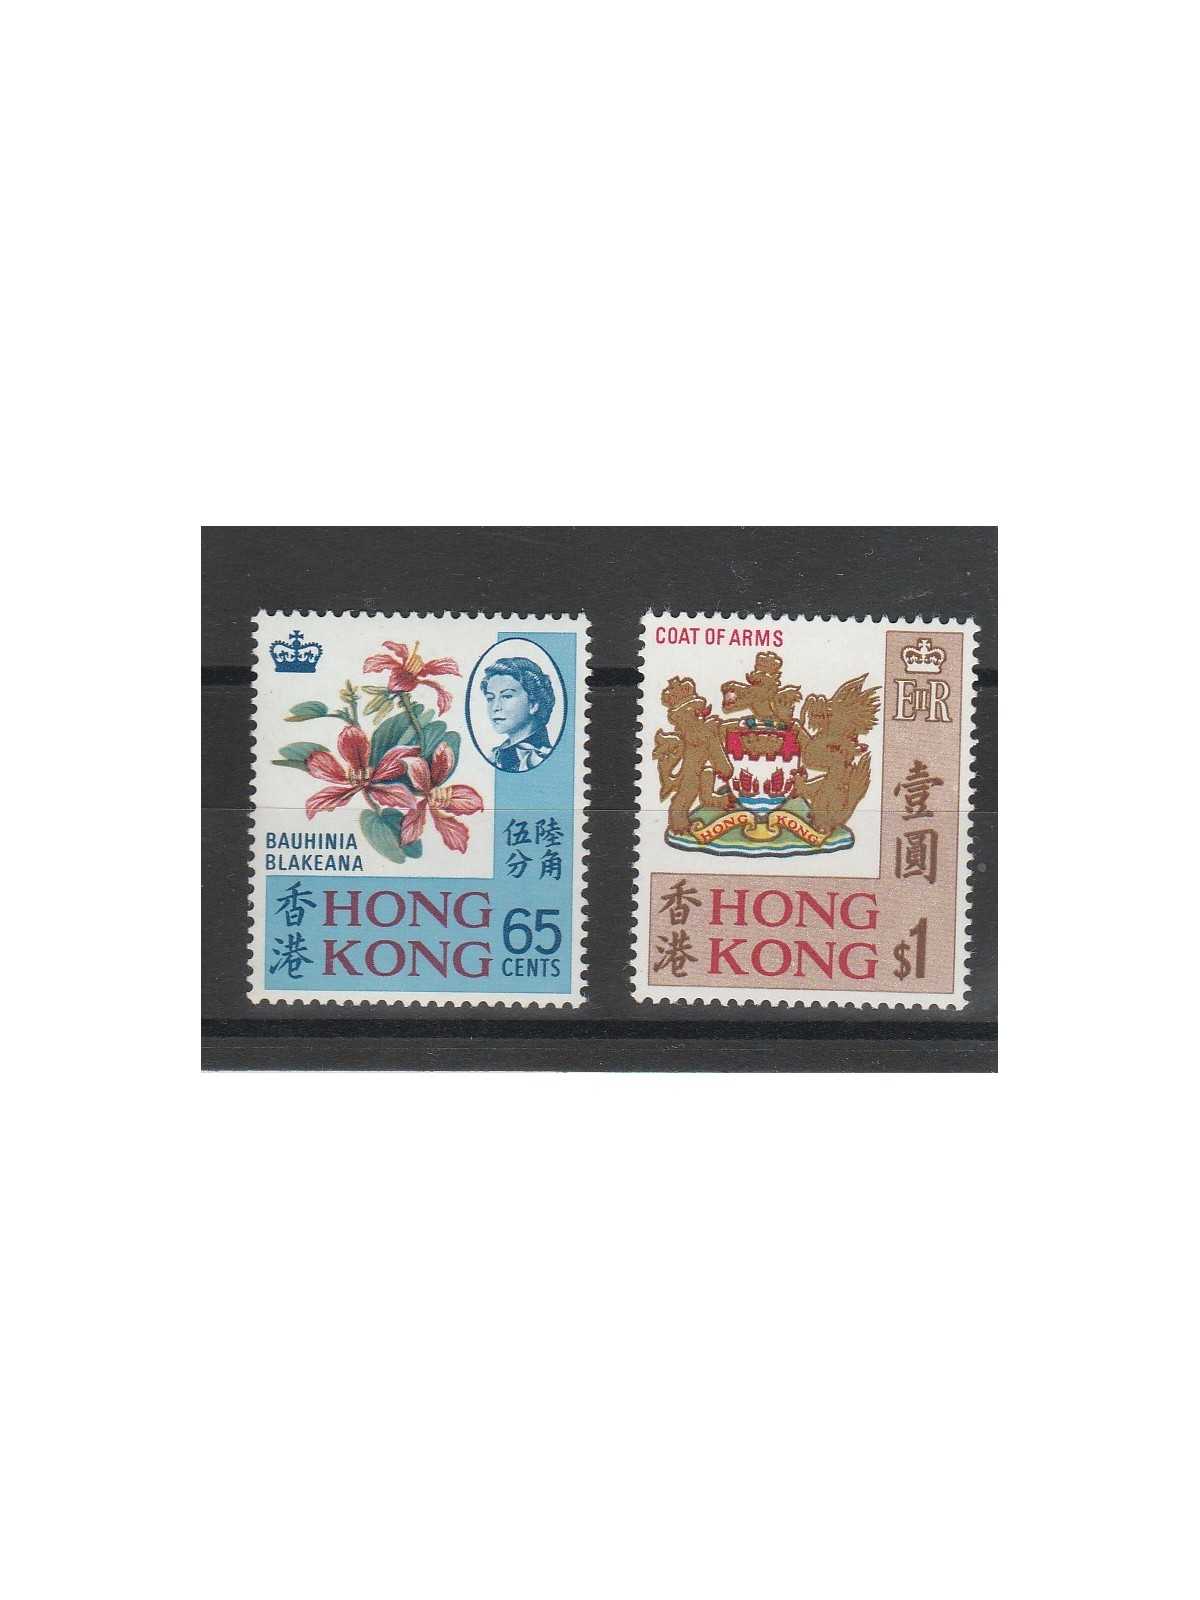 HONG KONG 1968 DEFINITIVA 2 V MNH YV 236-237 MF53801